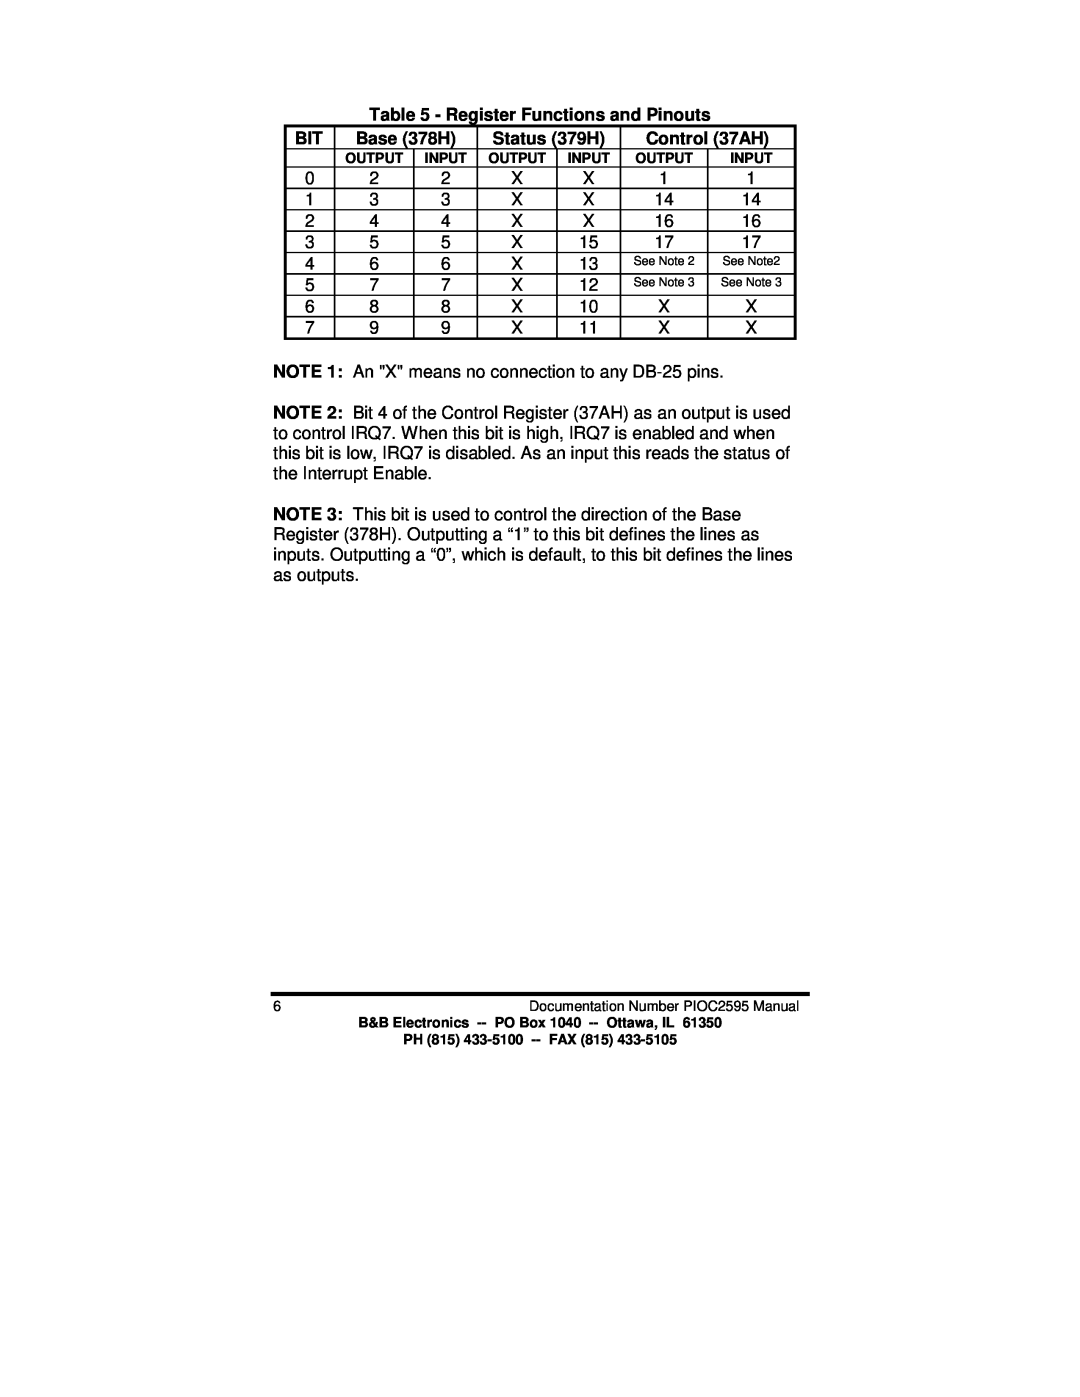 B&B Electronics PIOC manual Register Functions and Pinouts, Base 378H, Status 379H, Control 37AH 